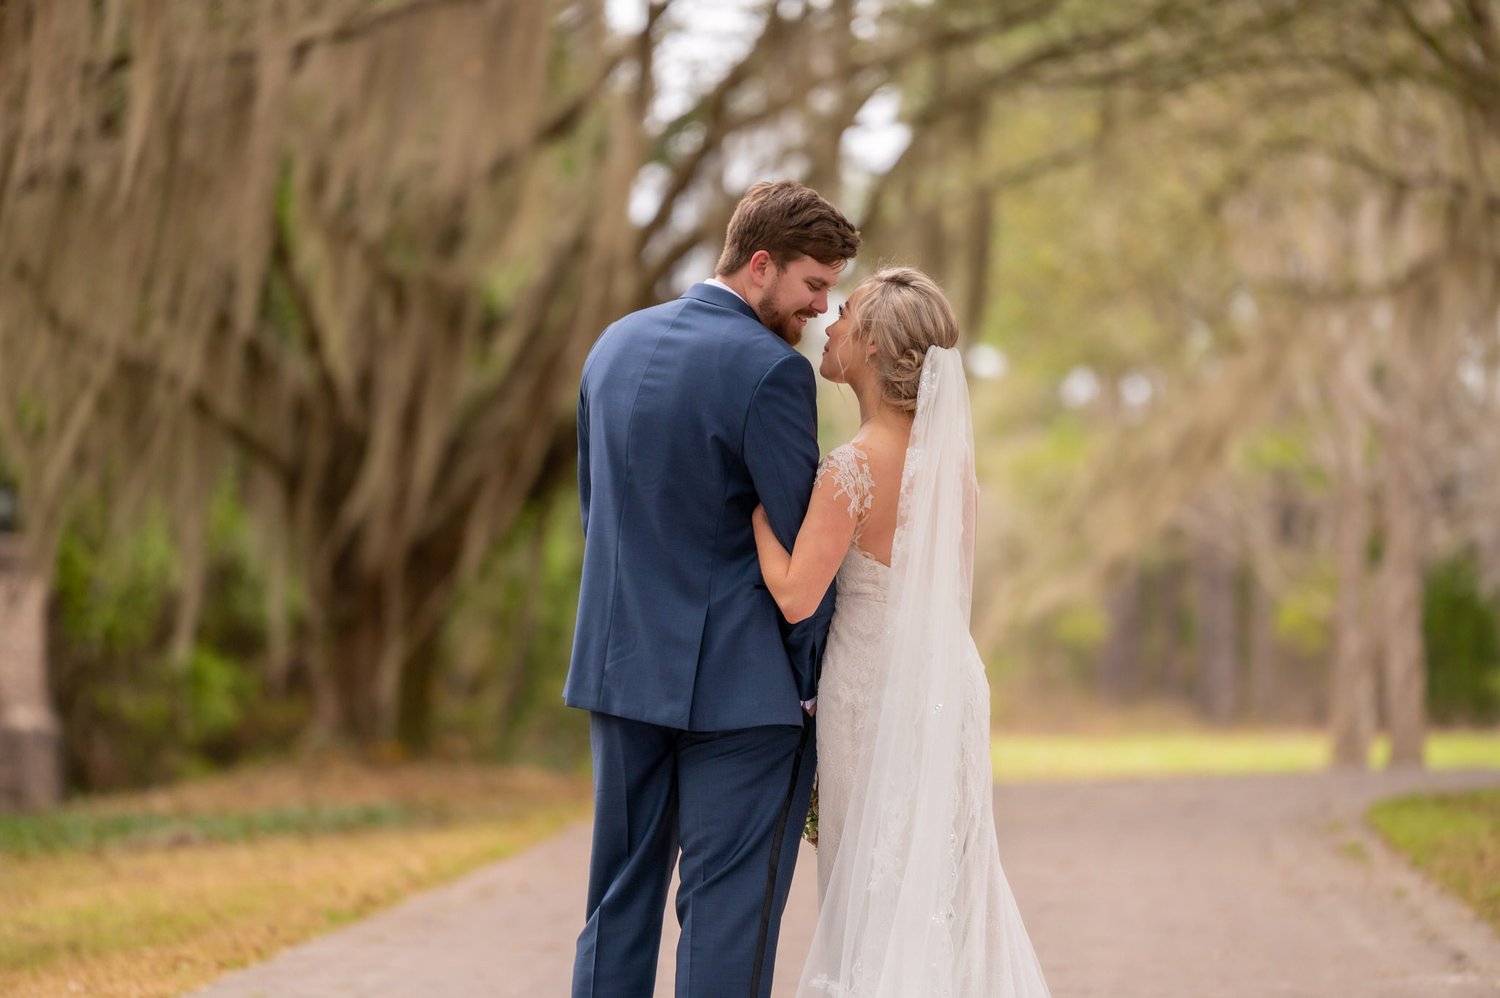 One Moment One Shot Photography | Savannah Wedding Photographer